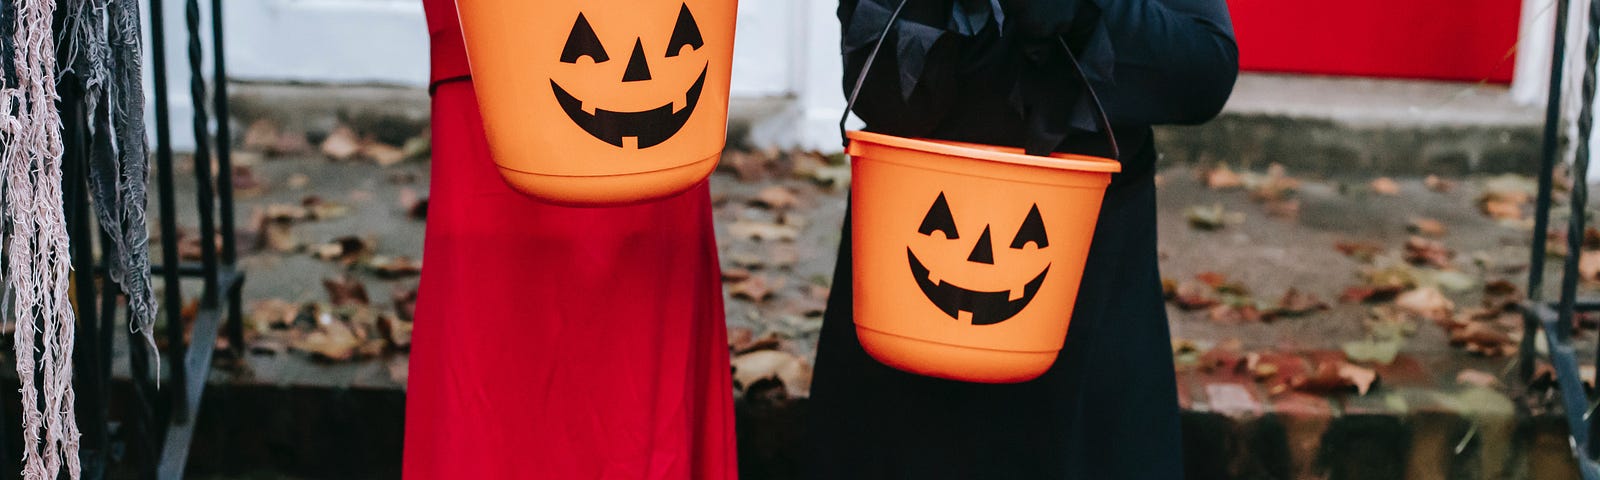 Two kids in Halloween costumes holding pumpkin buckets